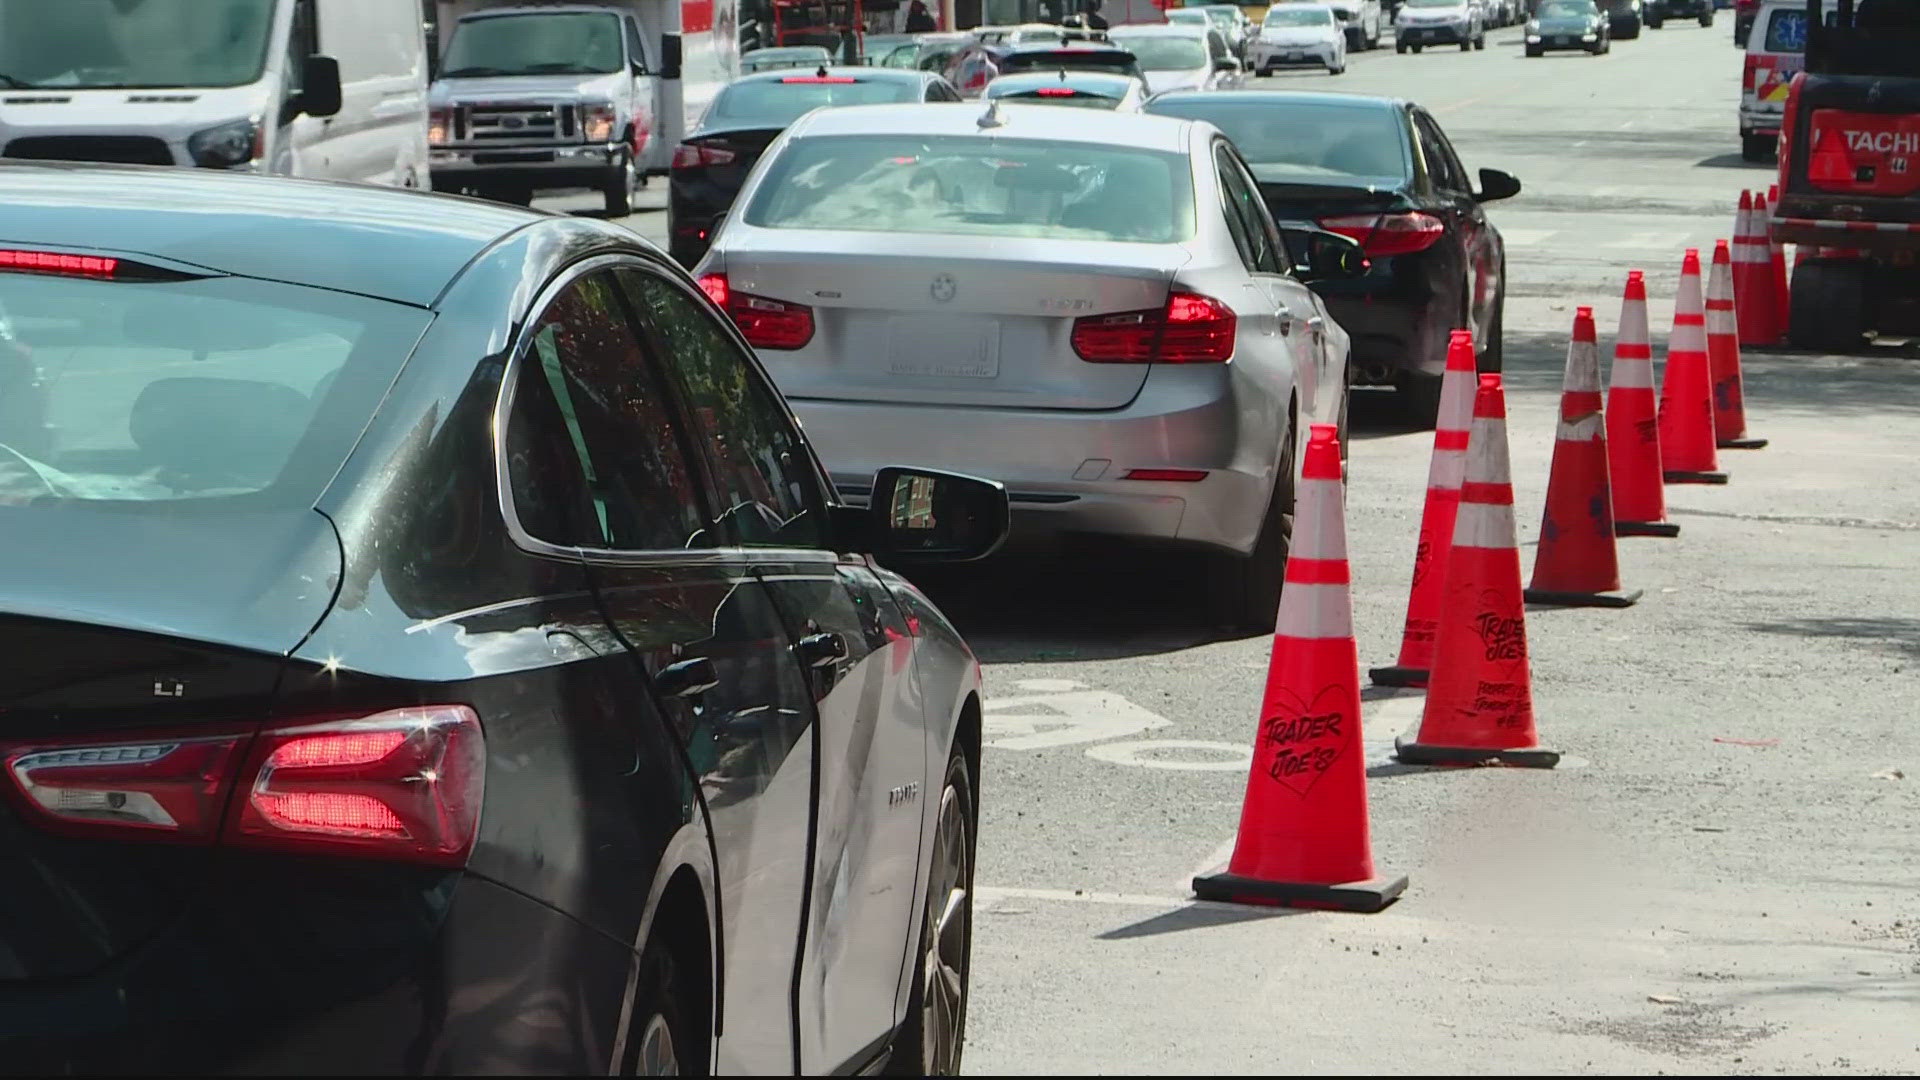 Councilmembers wants legislation that cracks down on dangerous driving.